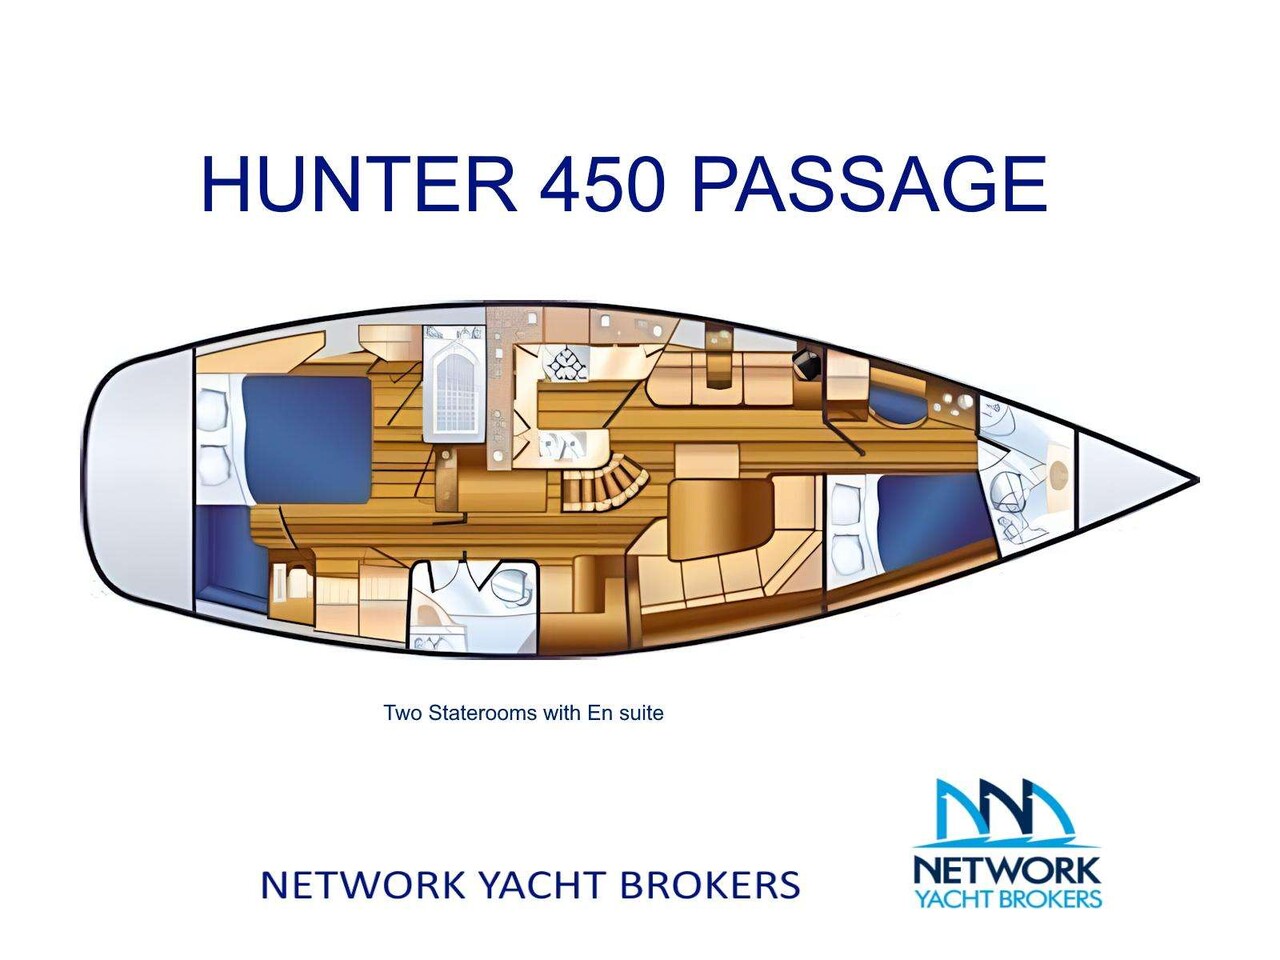 Hunter 450 Passage - image 2